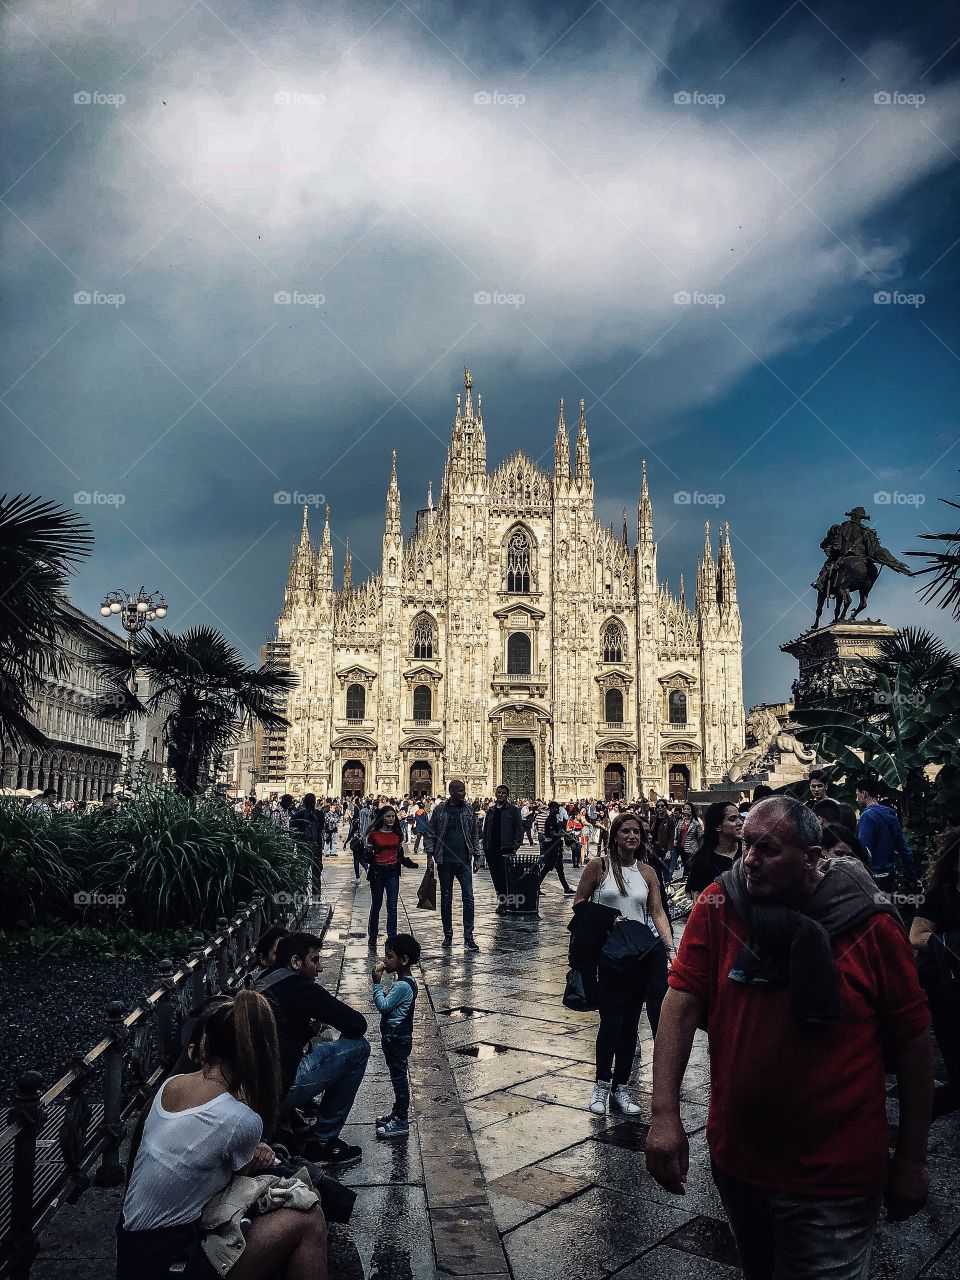 Duomo di Milano 